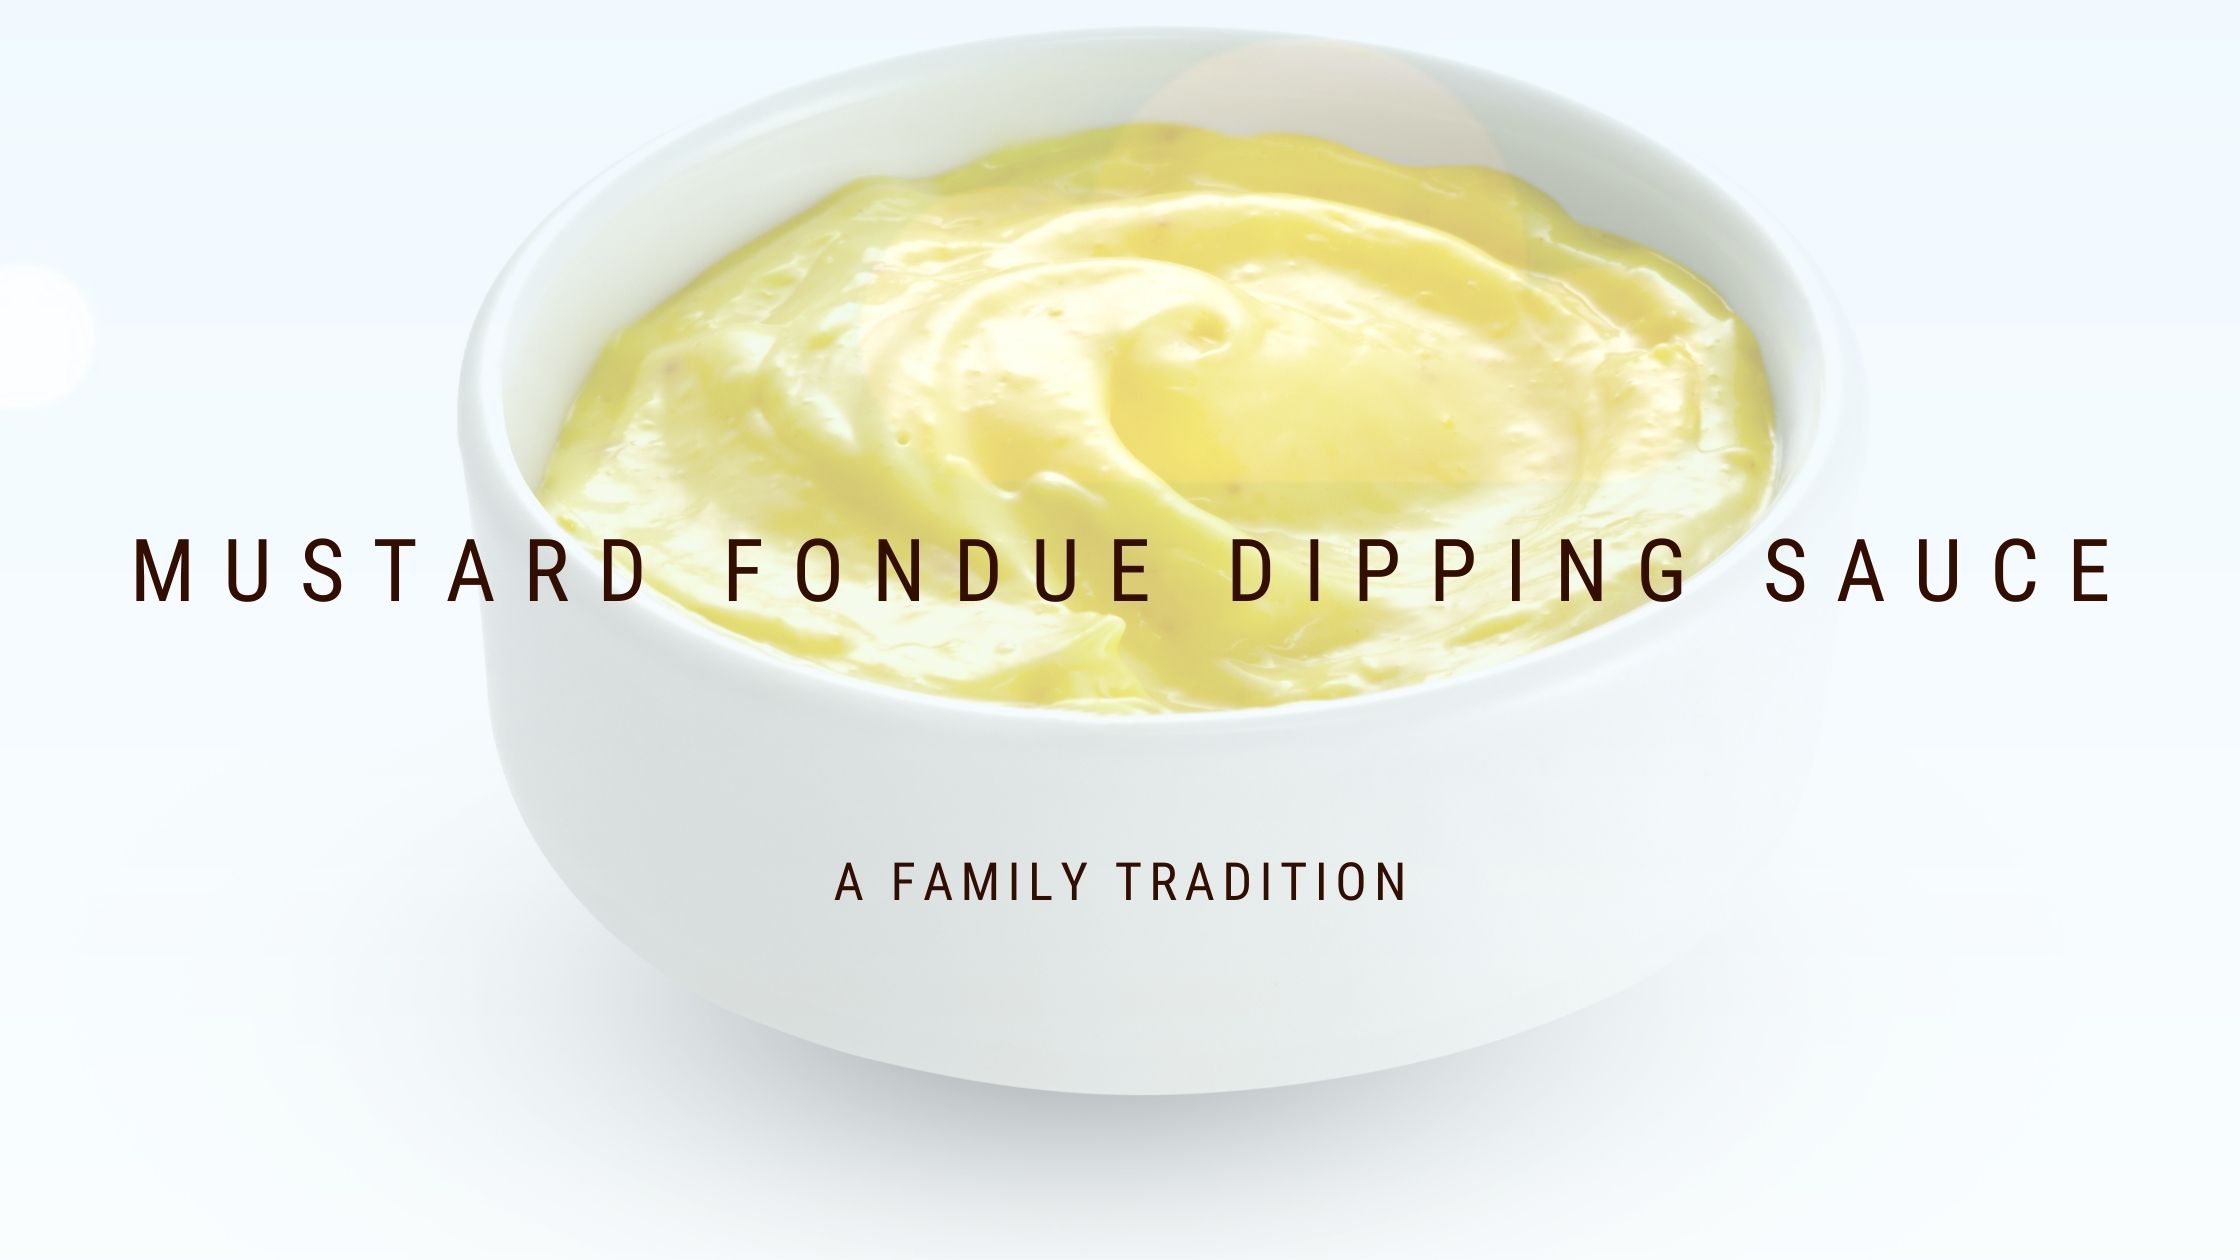 Mustard Fondue Dipping Sauce